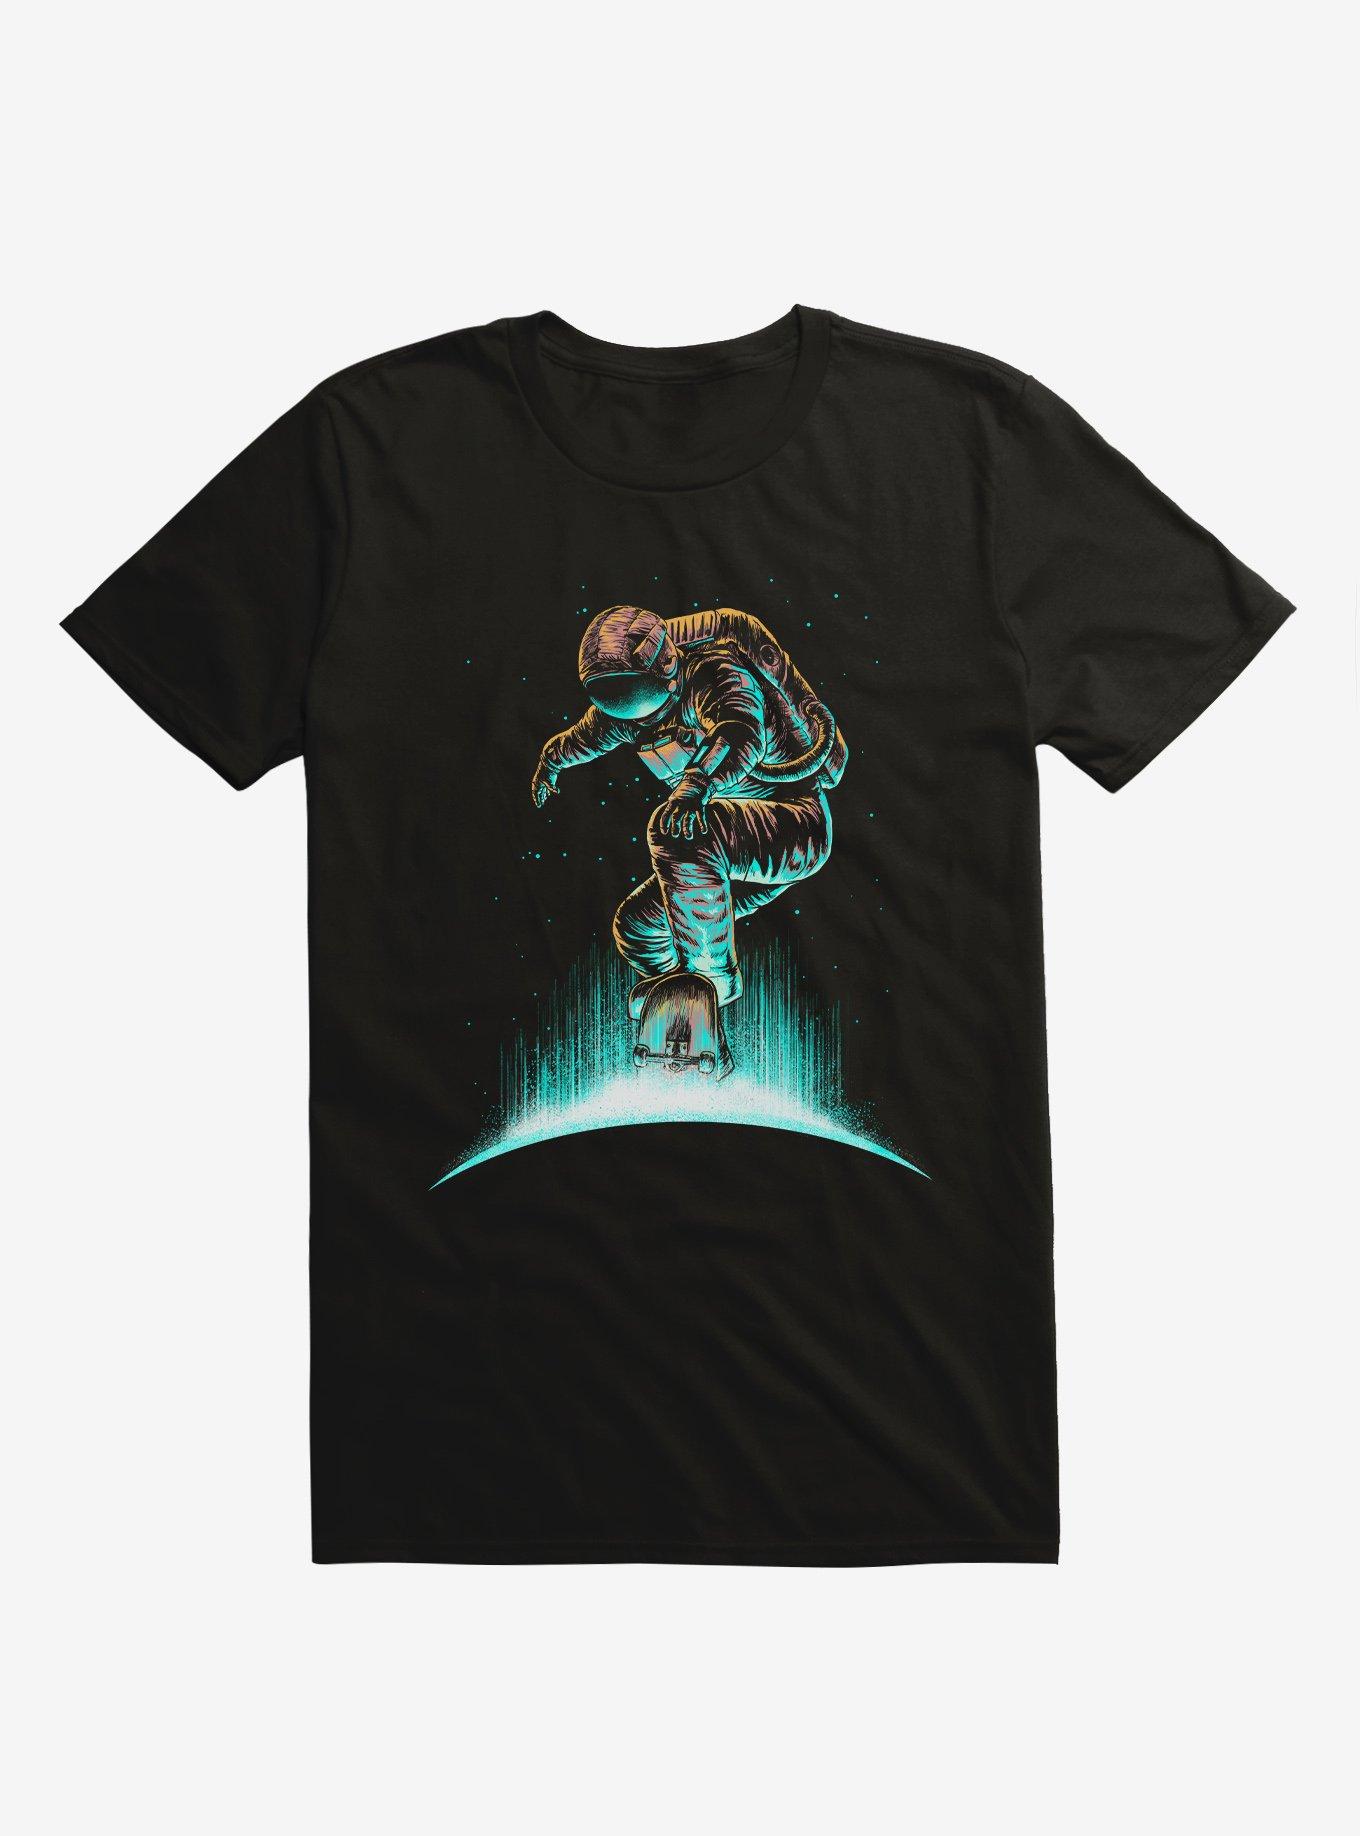 Space Grind Astronaut Skateboard Black T-Shirt